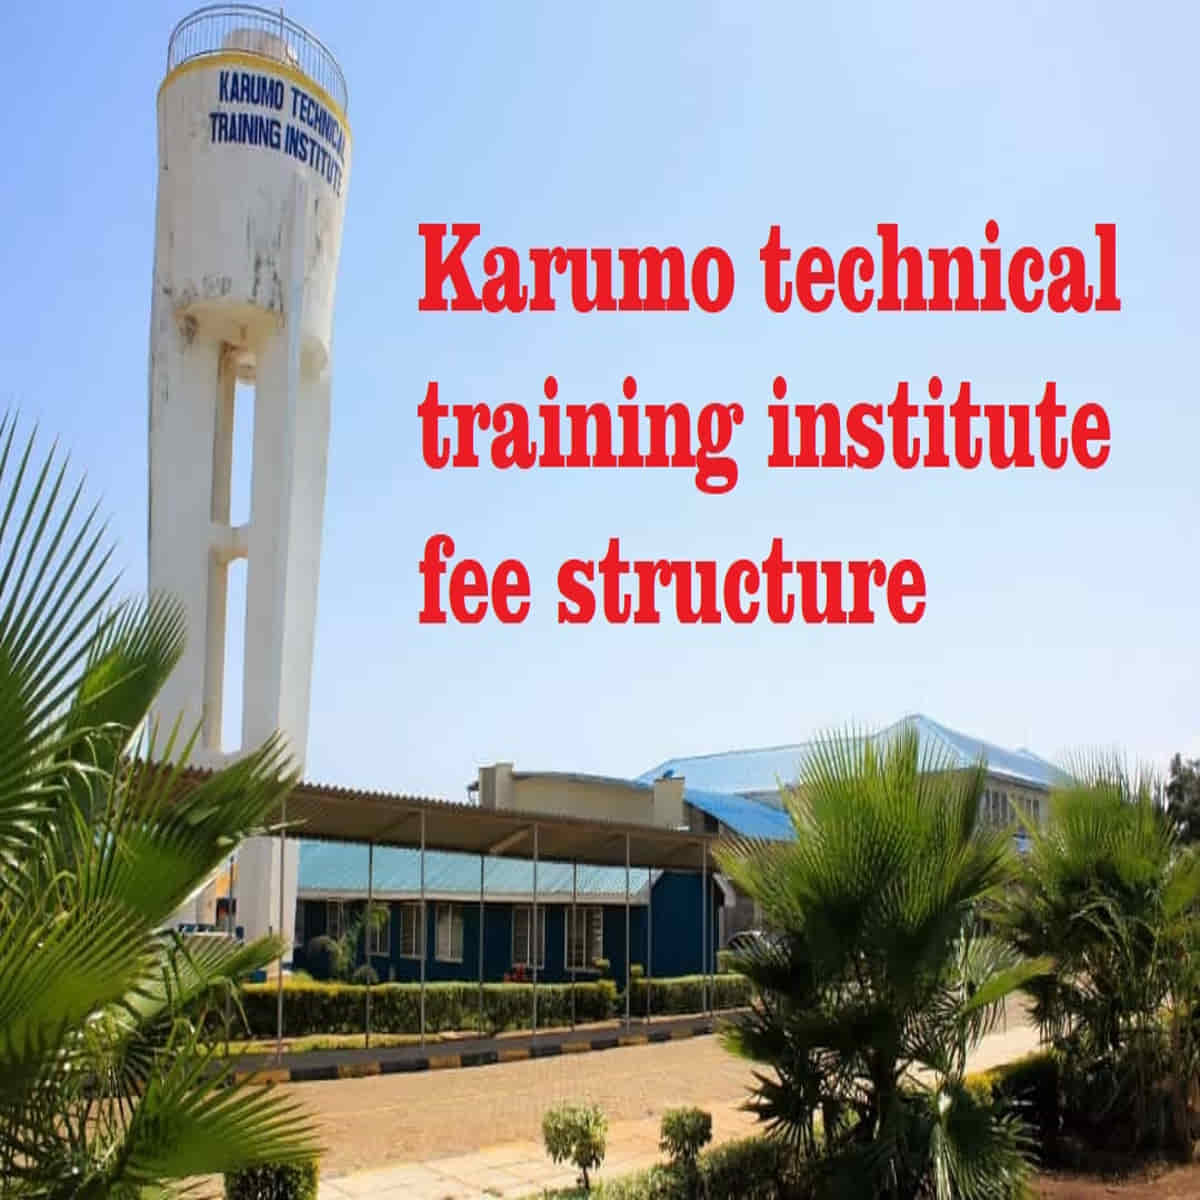 Karumo technical training institute fee structure